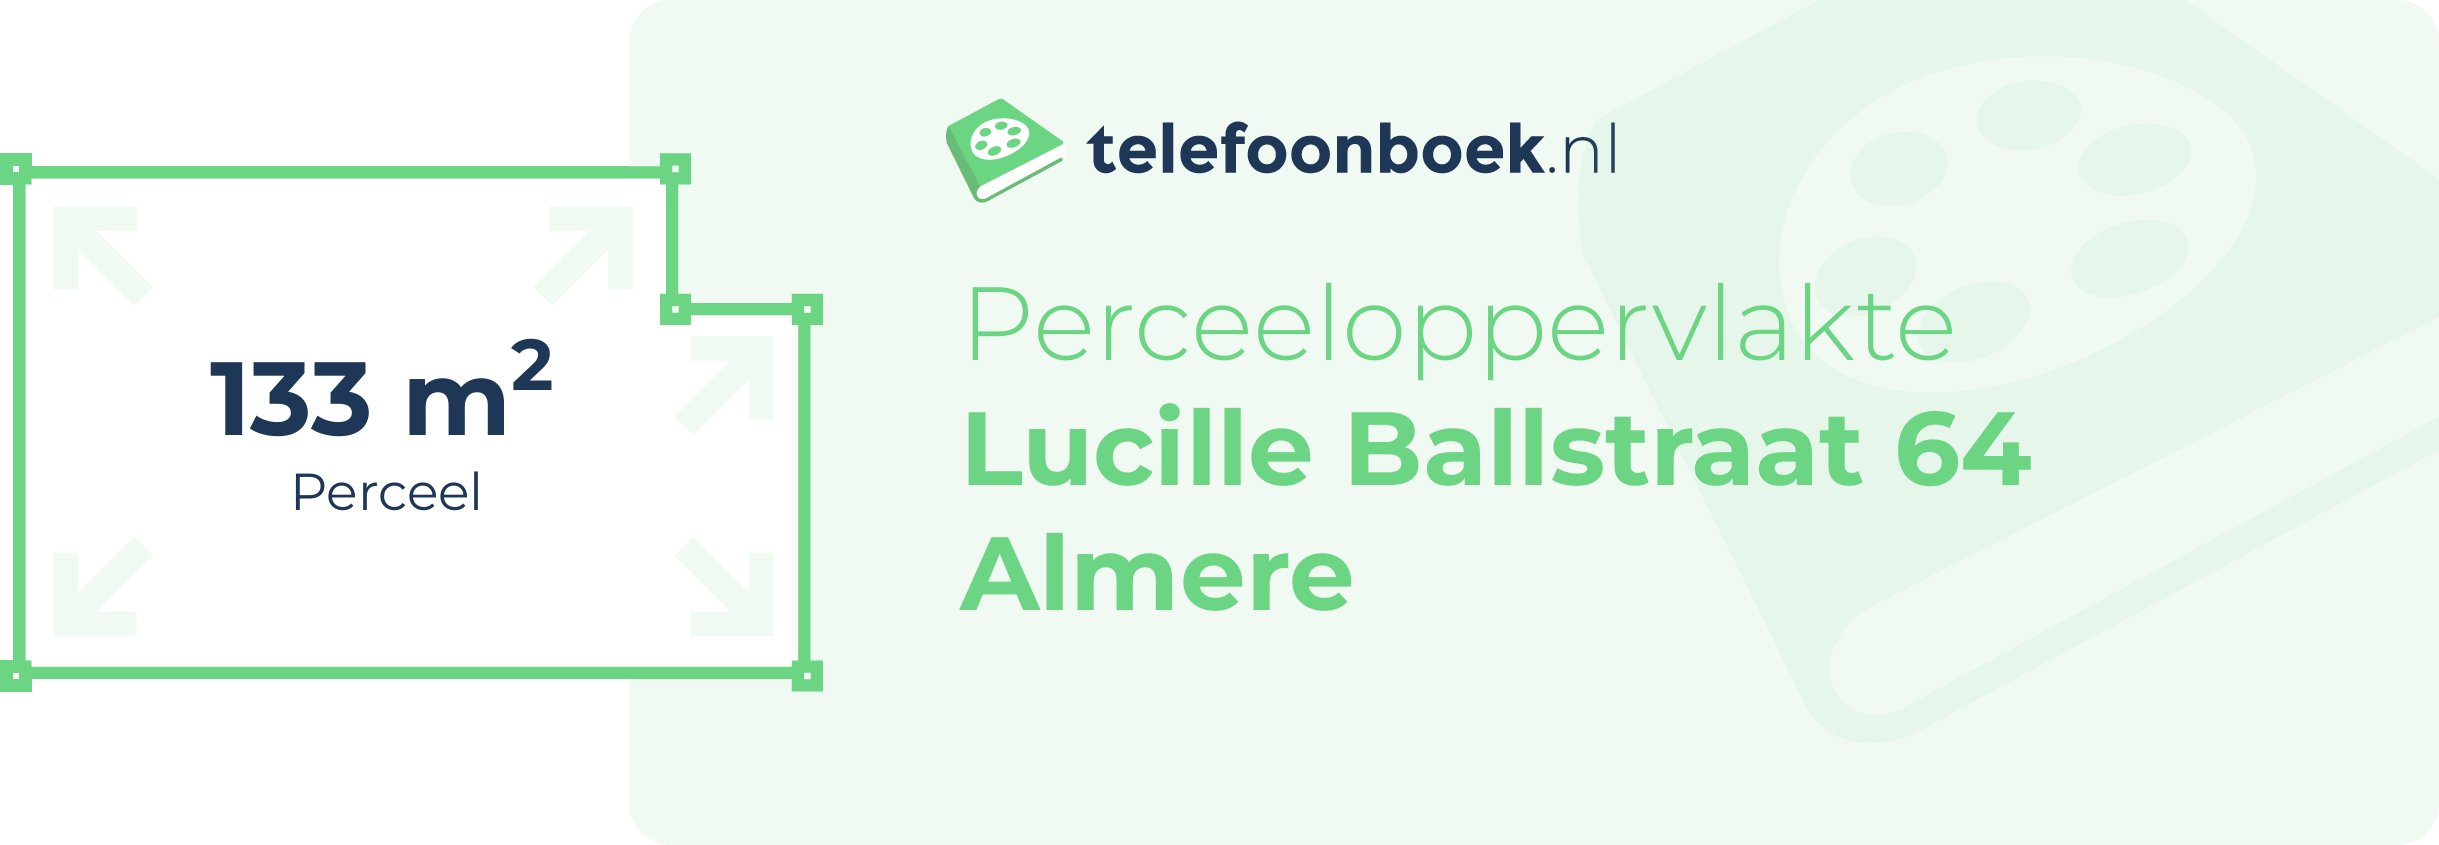 Perceeloppervlakte Lucille Ballstraat 64 Almere